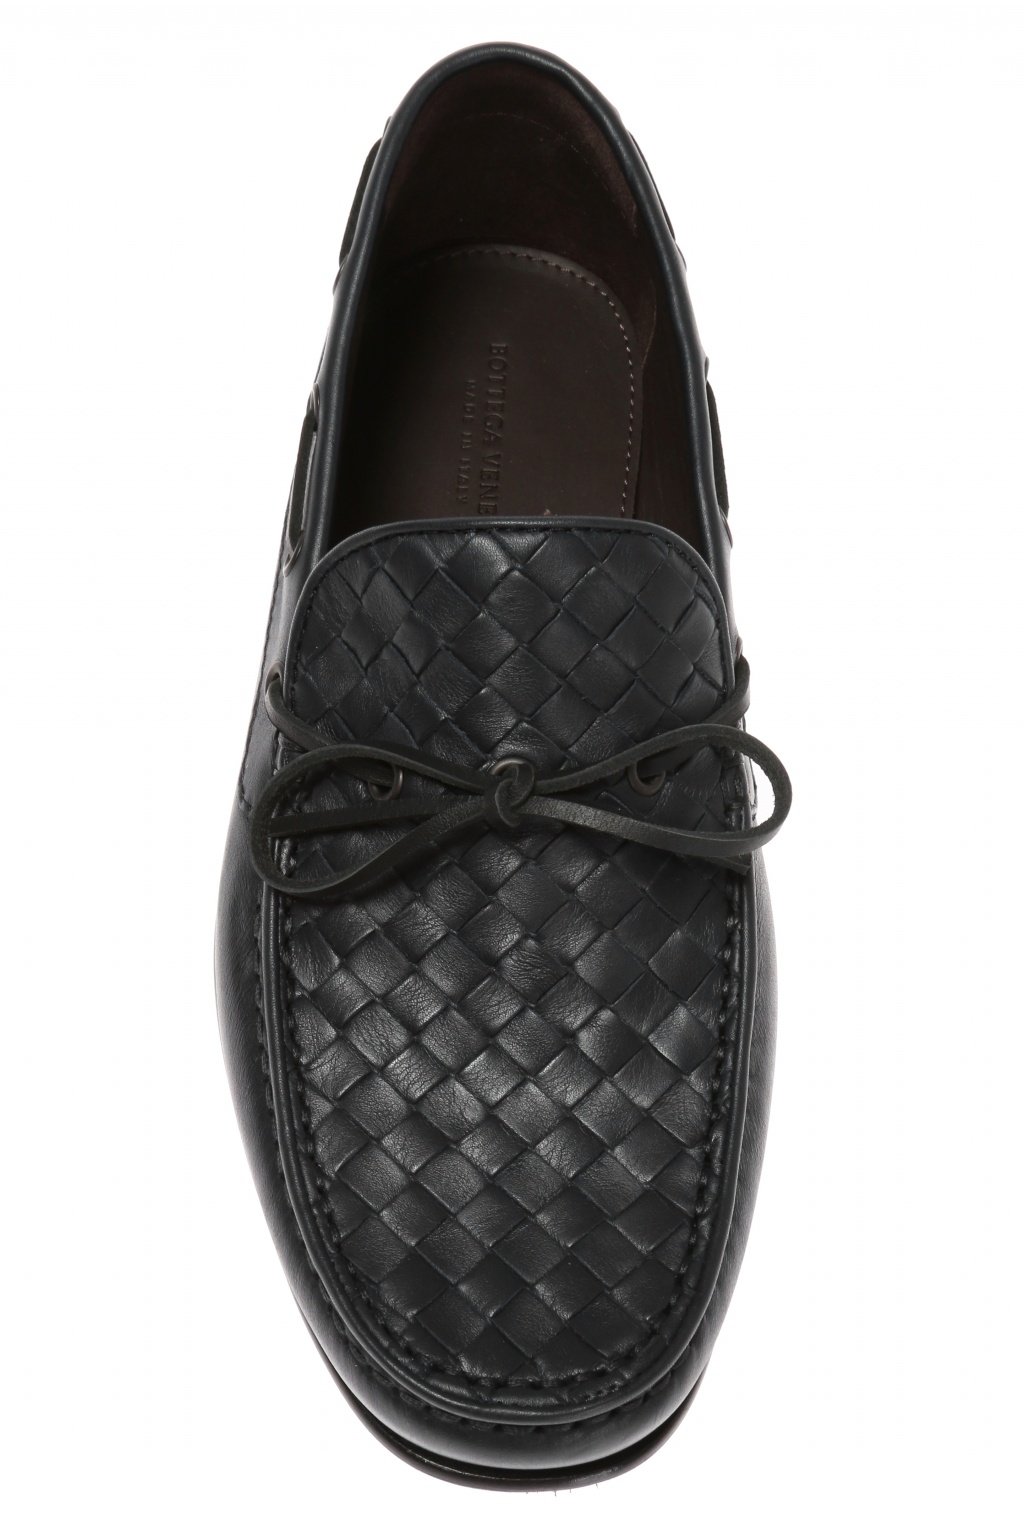 Bottega Veneta Intrecciato Leather Loafers - Black - Loafers